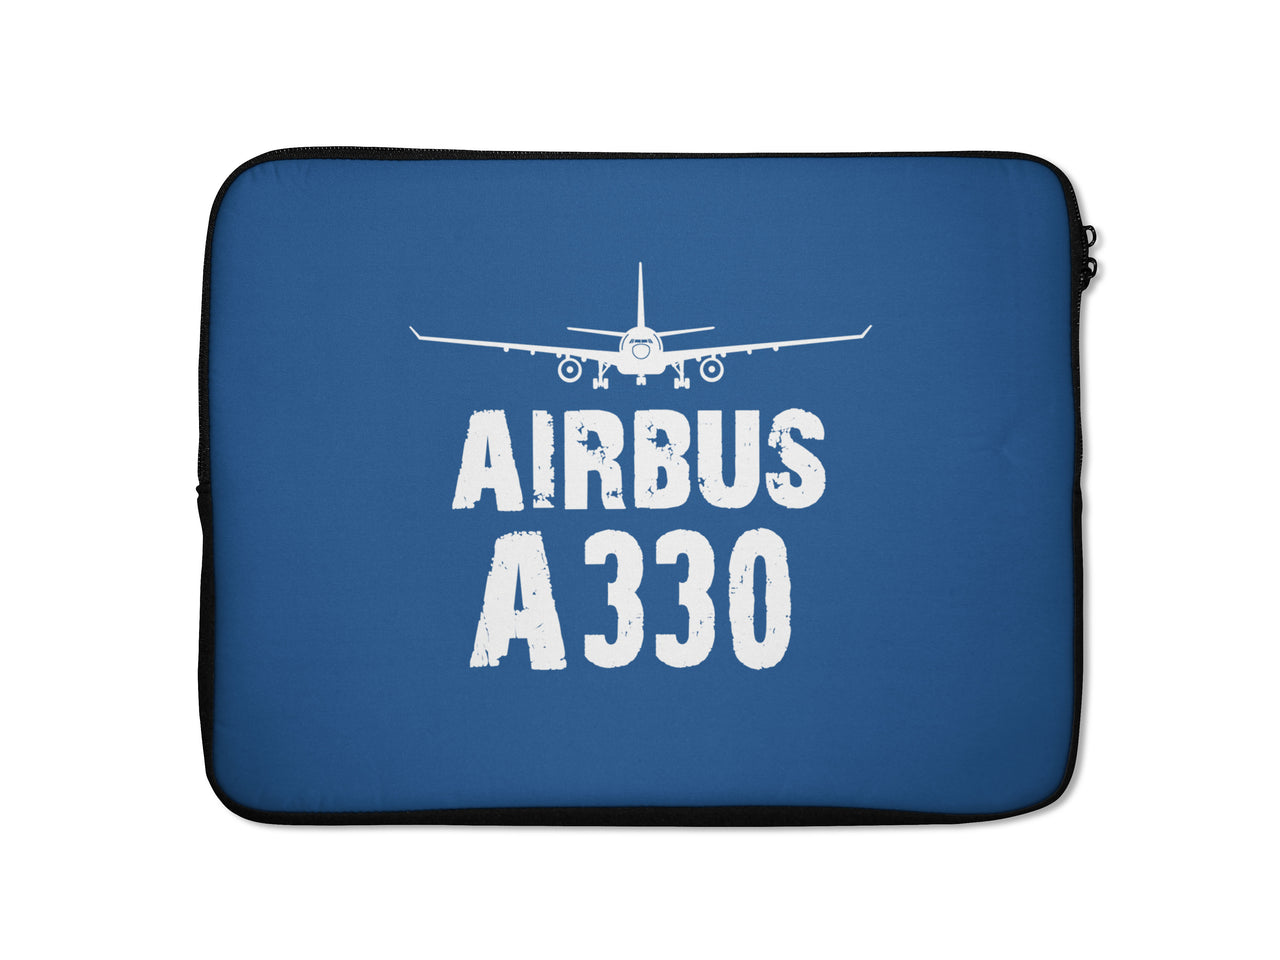 Airbus A330 & Plane Designed Laptop & Tablet Cases